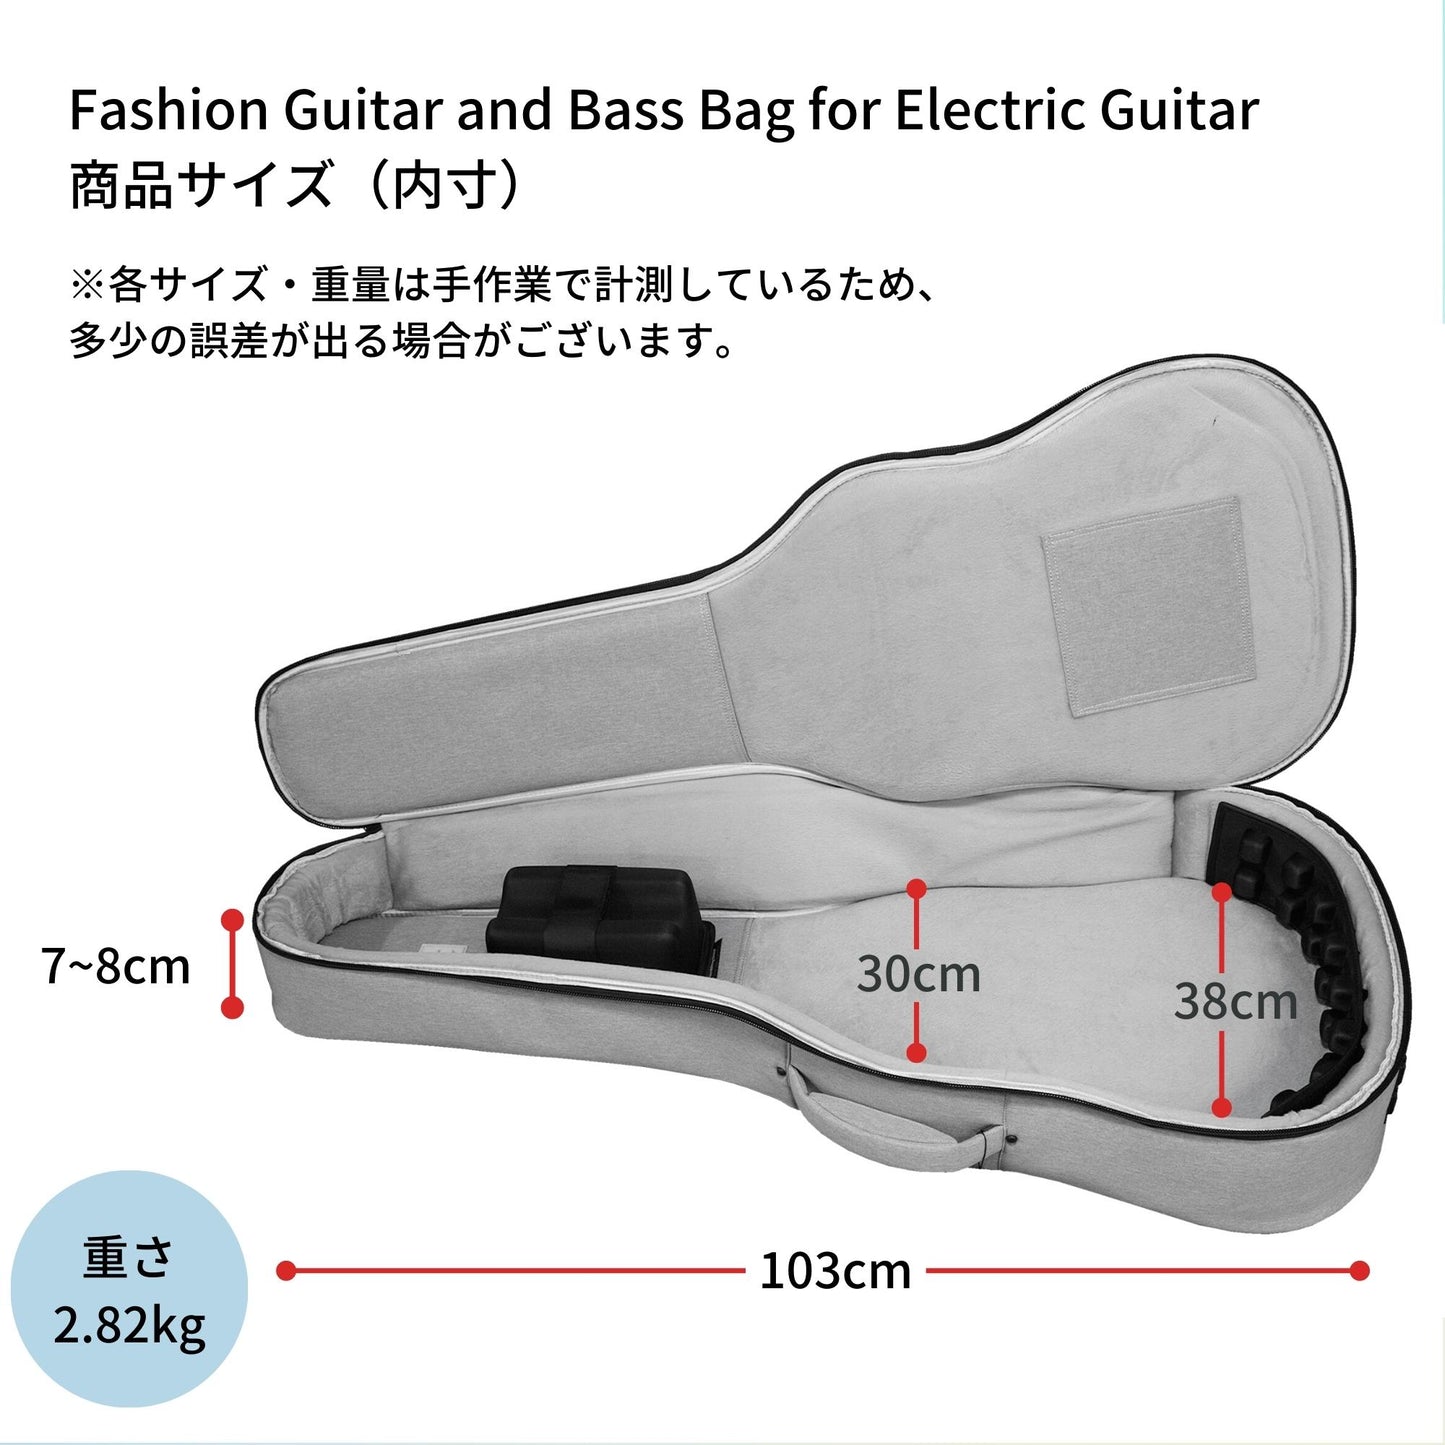 Kavaborg/Fashion Guitar and Bass Bag for Electric Guitar エレキギター用